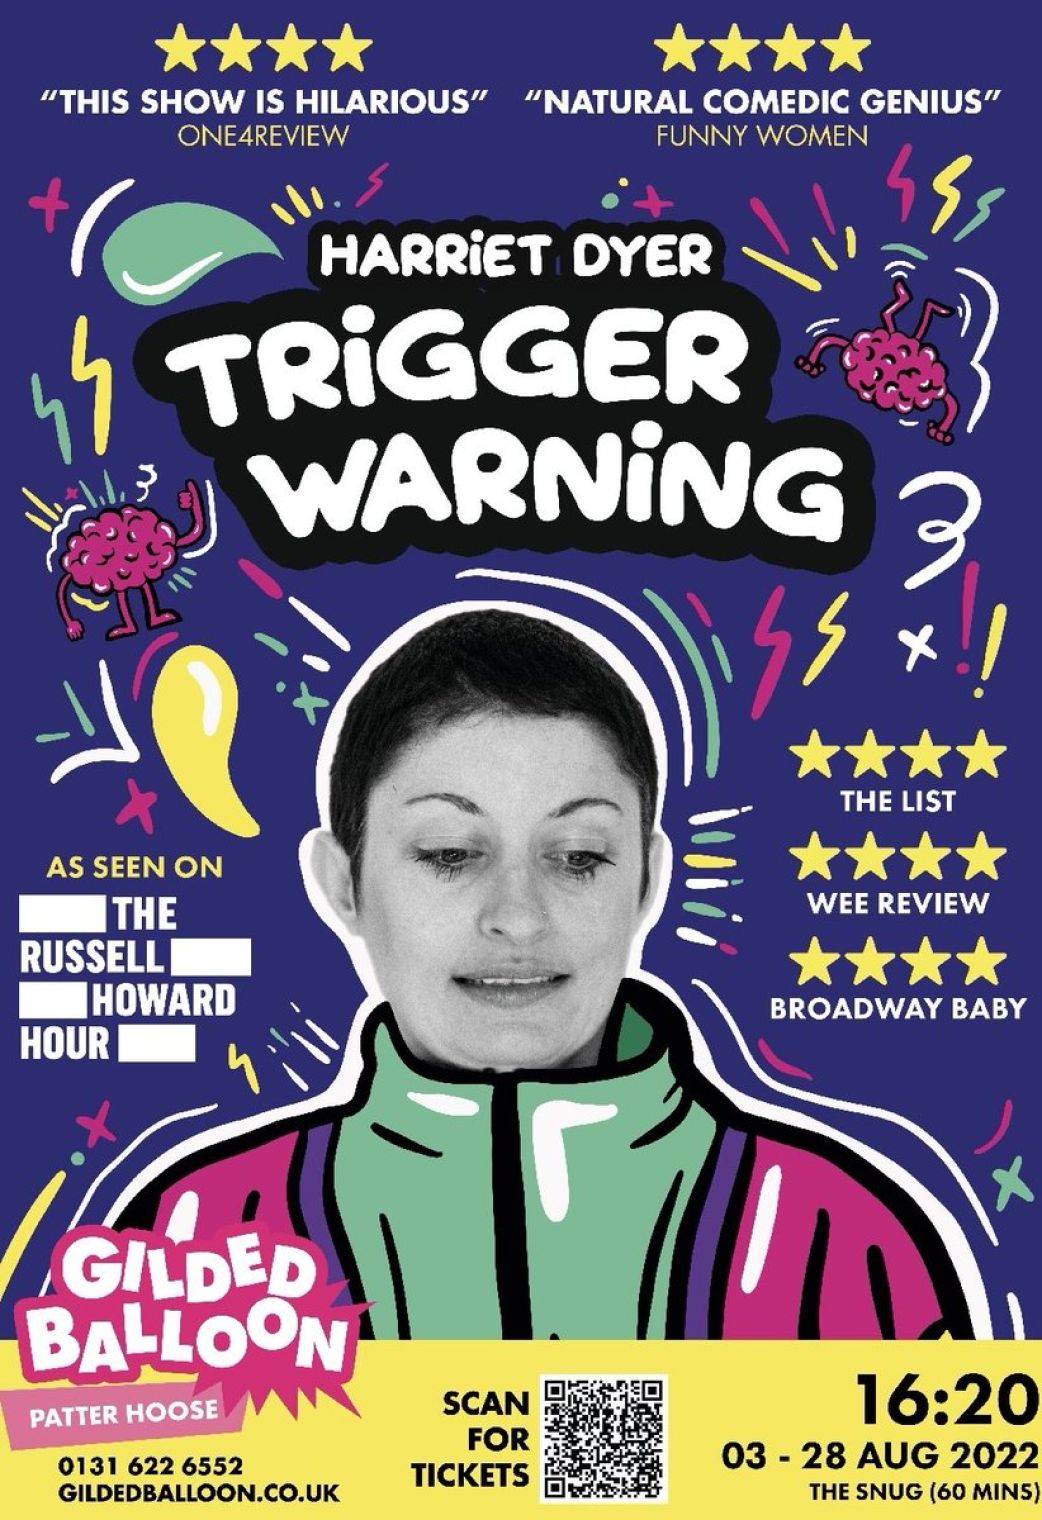 Harriet Dyer's Edinburgh show 'Trigger Warning' receives rave reviews 